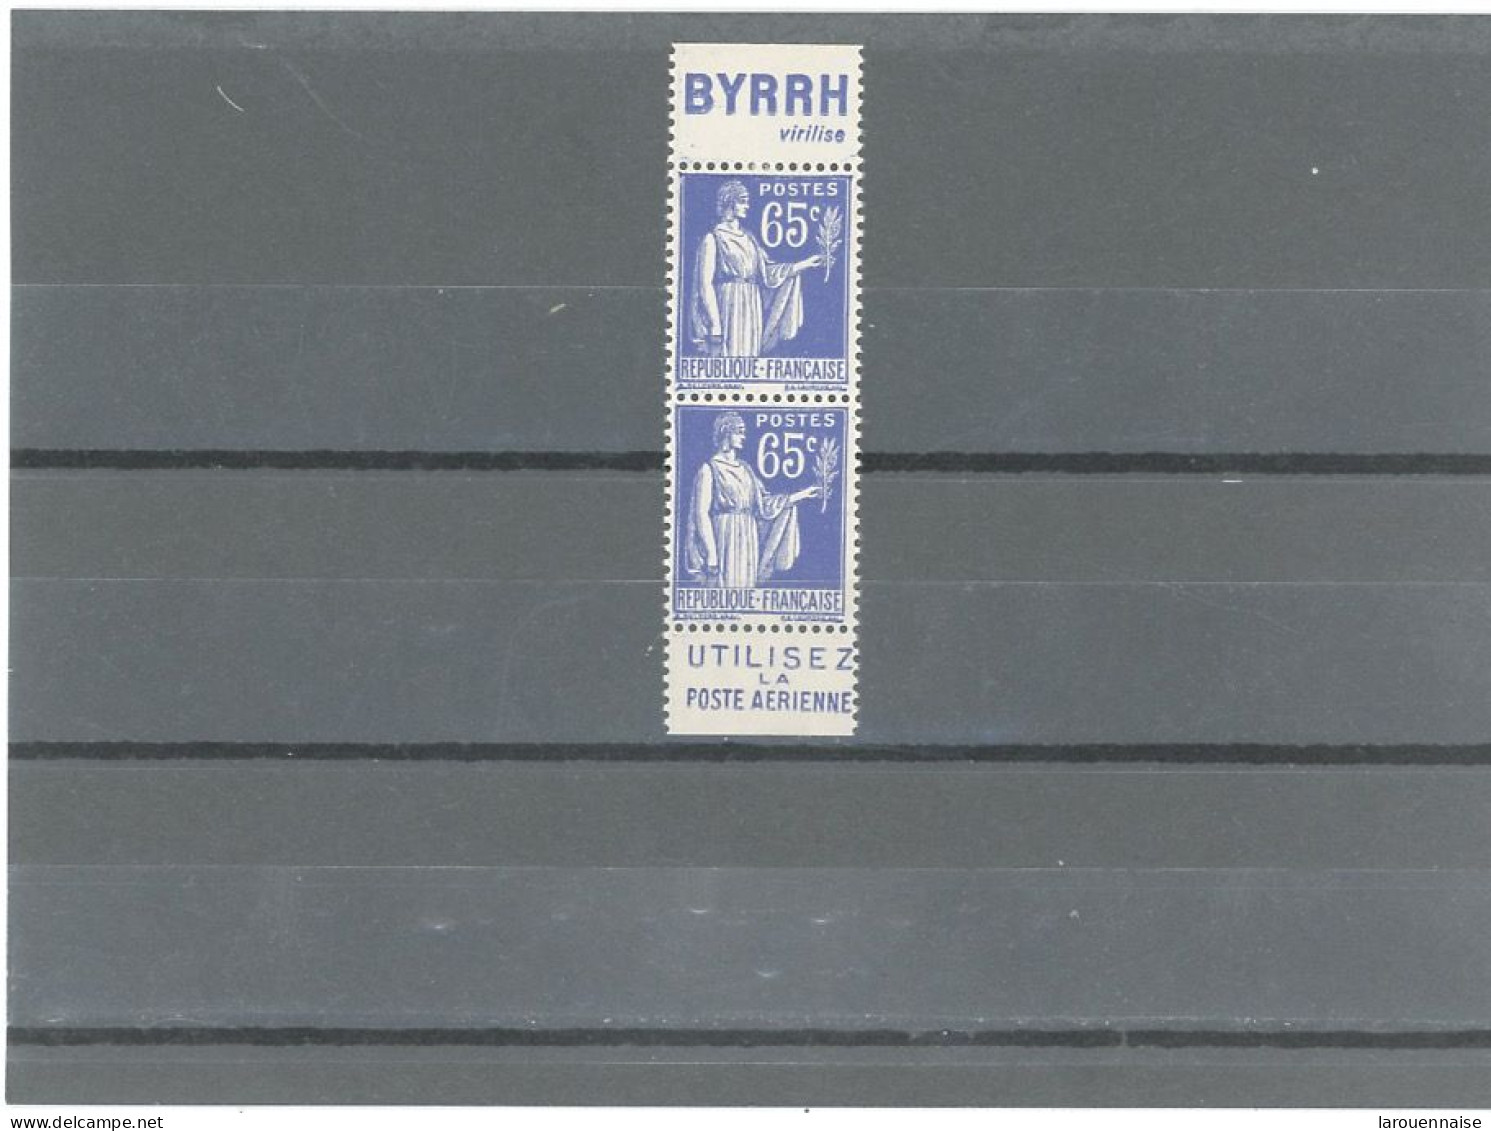 BANDE PUB- N°365 TYPE II - PAIRE N°-PAIX 65c BLEU -PUB -BYRRH ( Virilise) + POSTE AERIENNE -MAURY 243c - Neufs